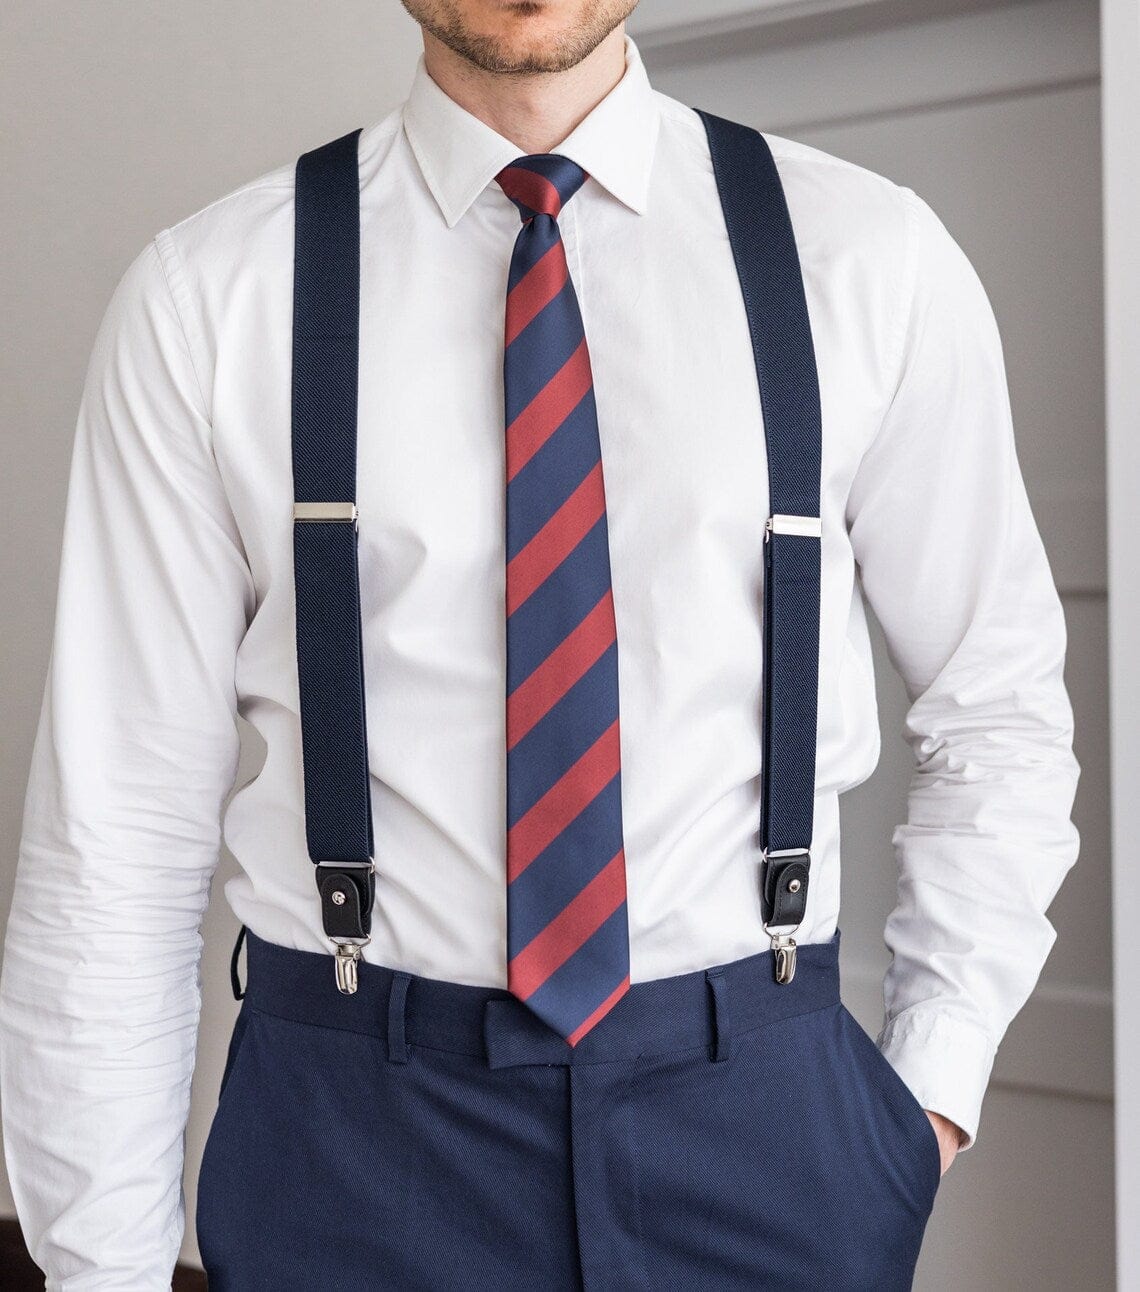 aesido Men's suit trousers elastic suspenders